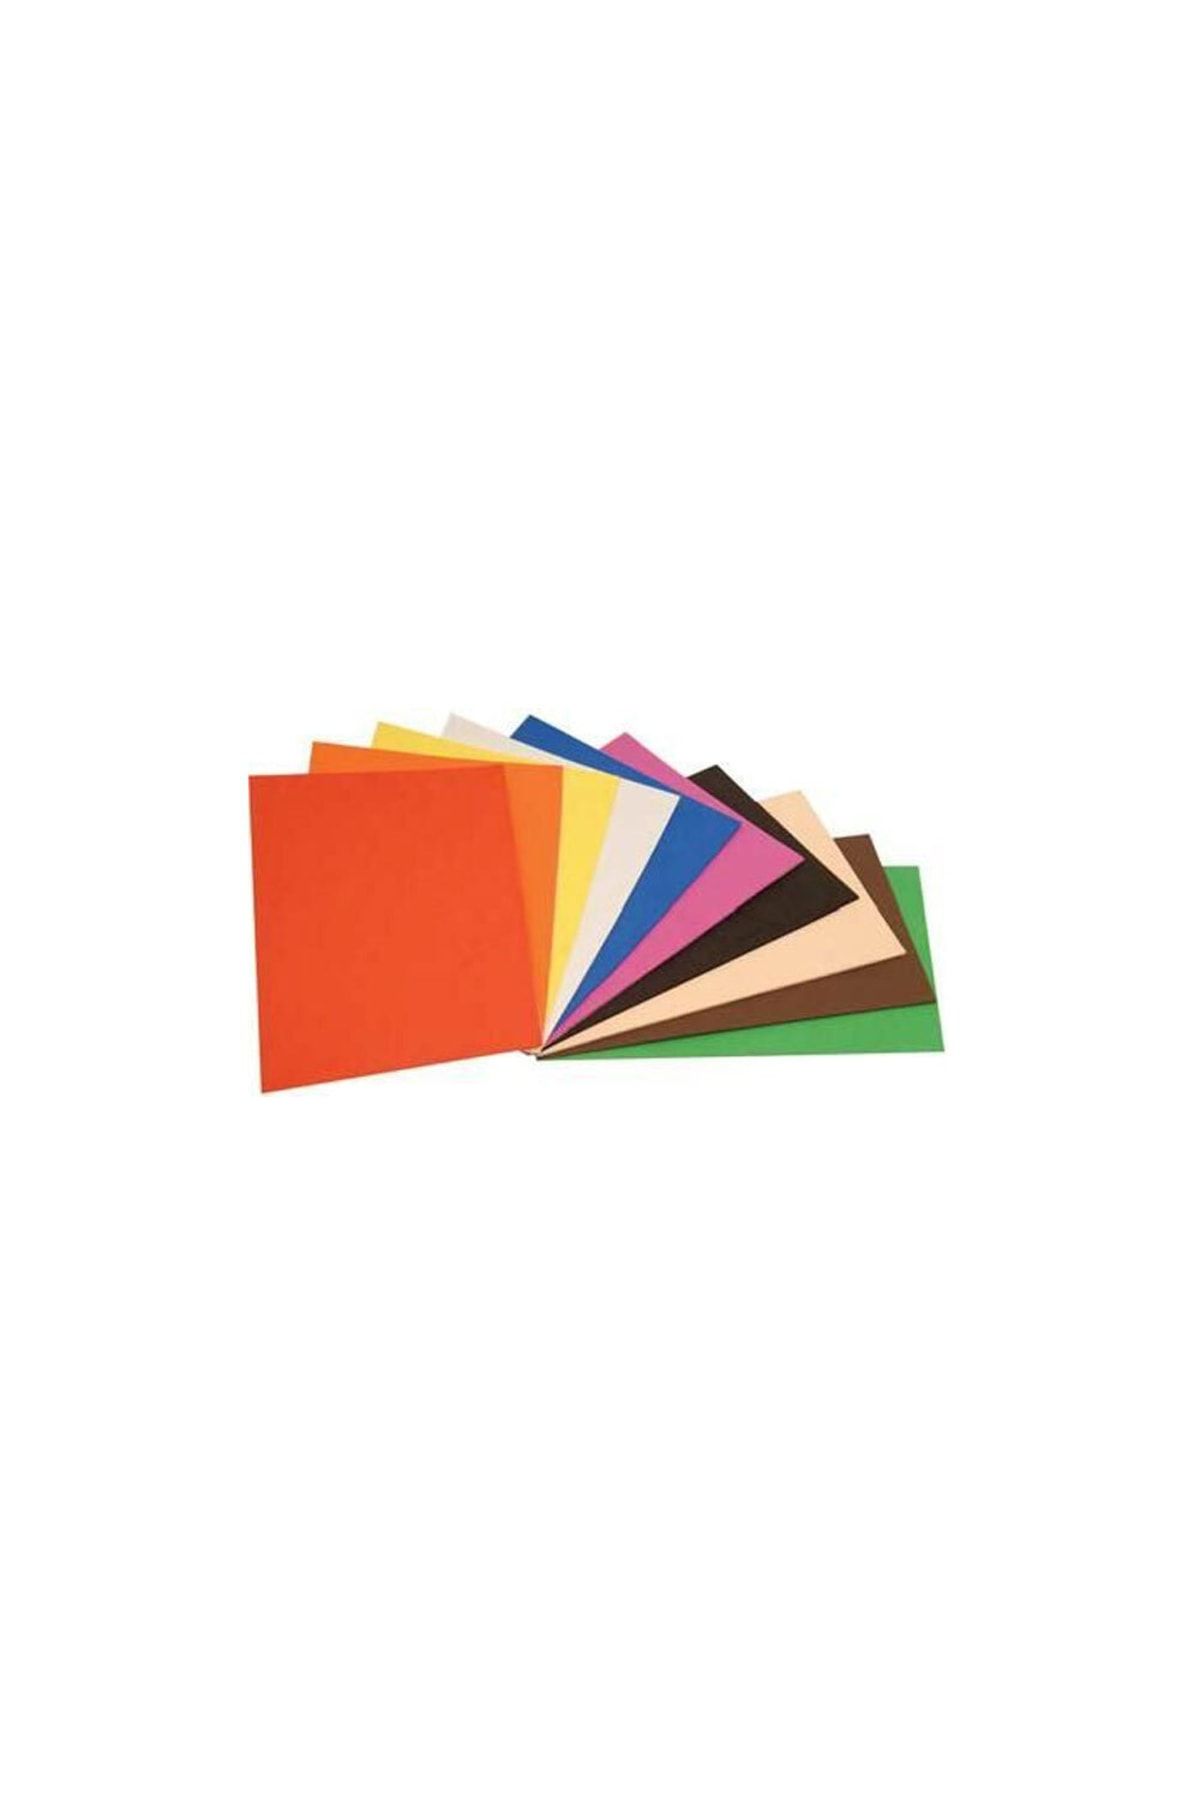 Tahtakale Hobi Lino Eva A4 Ebat 10 Renk Yapışkanlı Kağıt